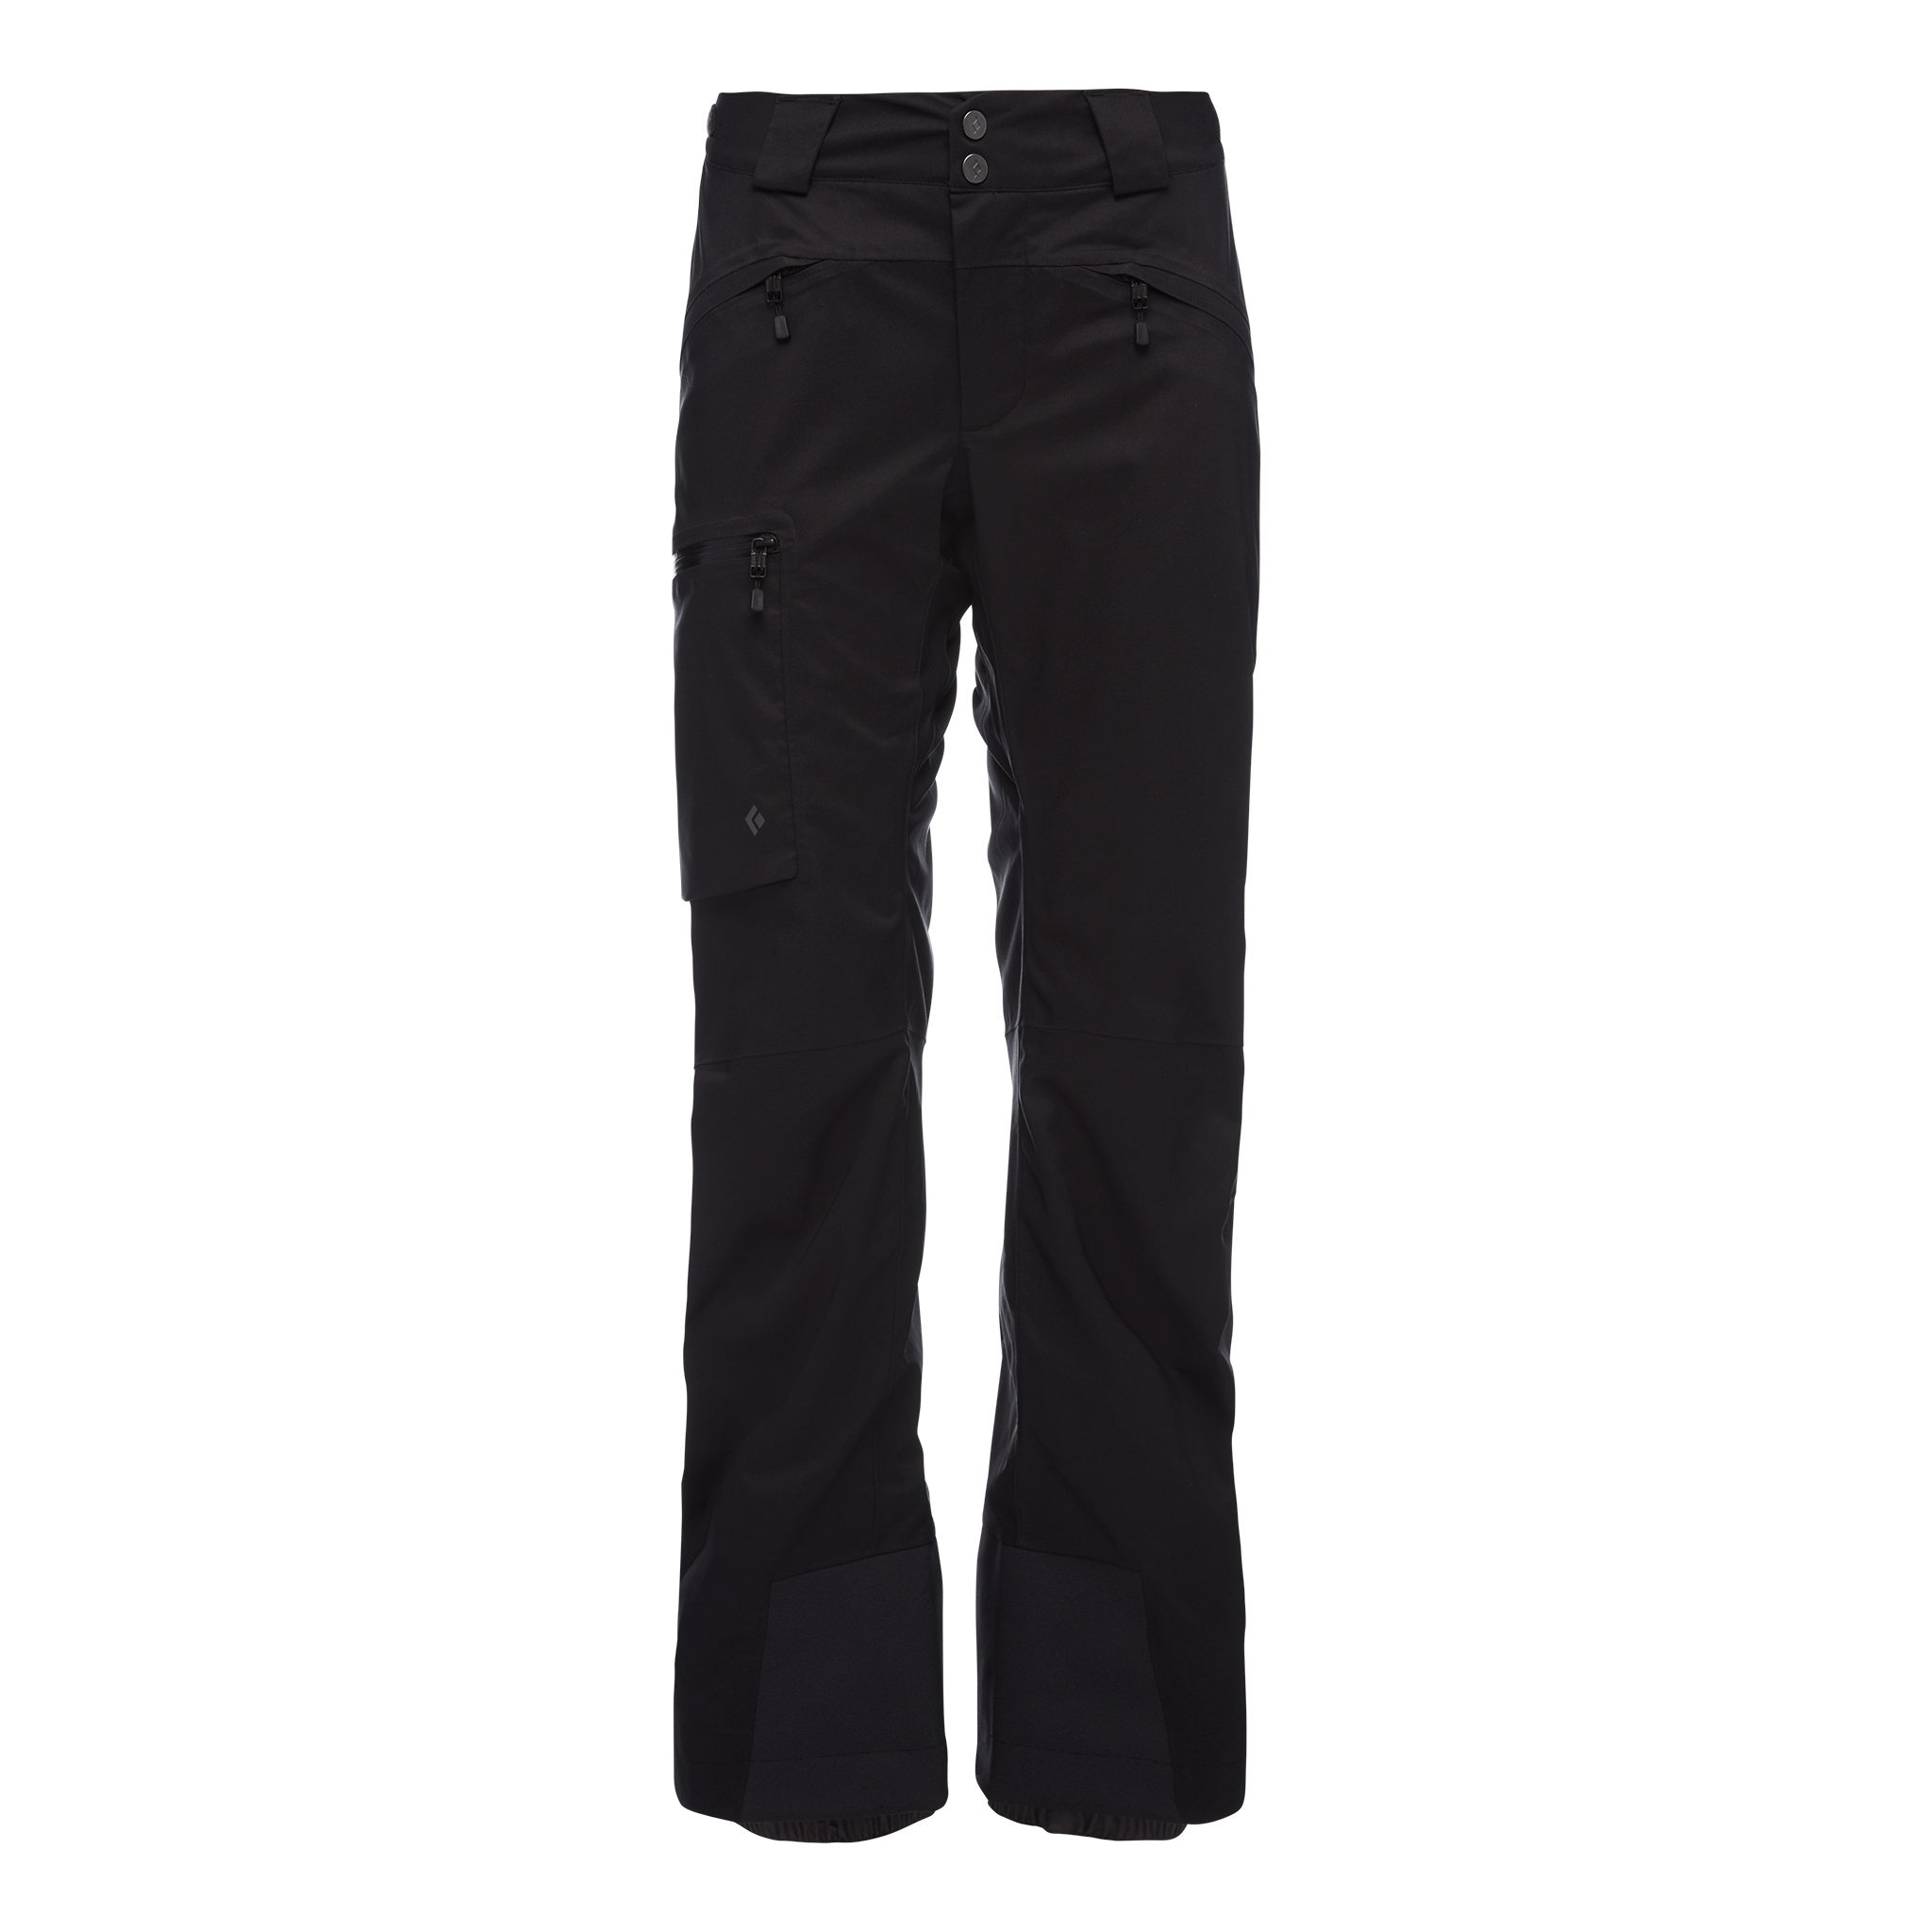 Black Diamond Equipment Women's BoundaryLine Insulated Pants, Small Black